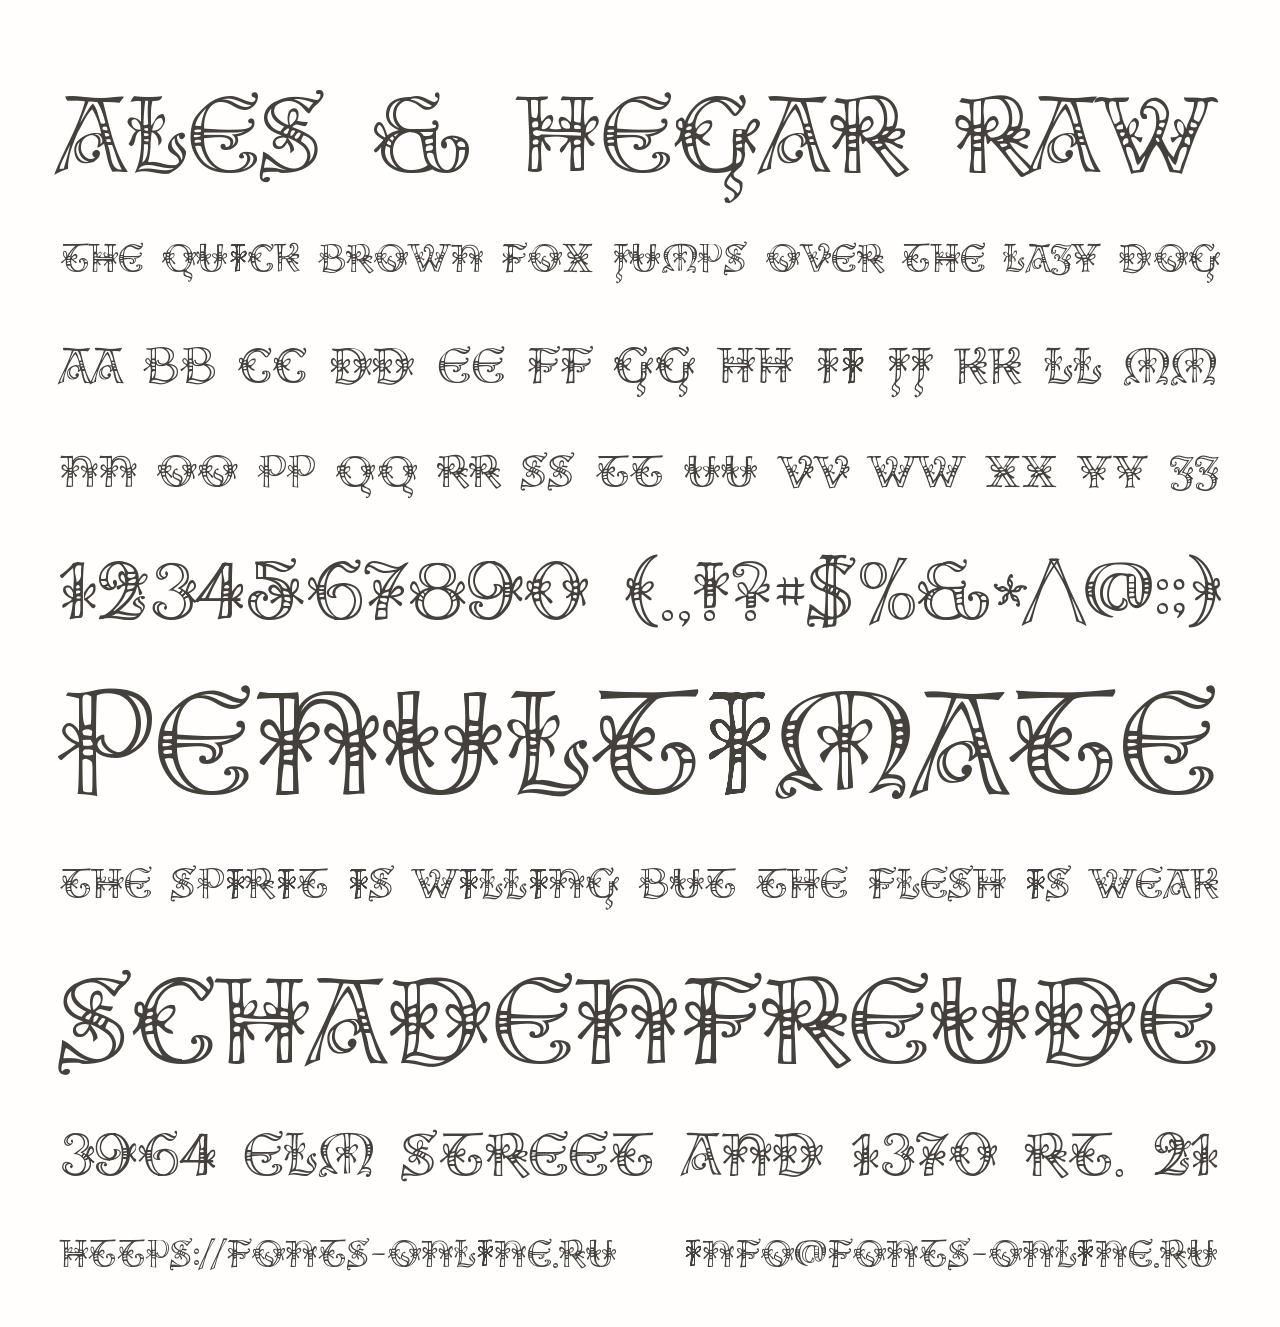 Шрифт Ales & Hegar Raw